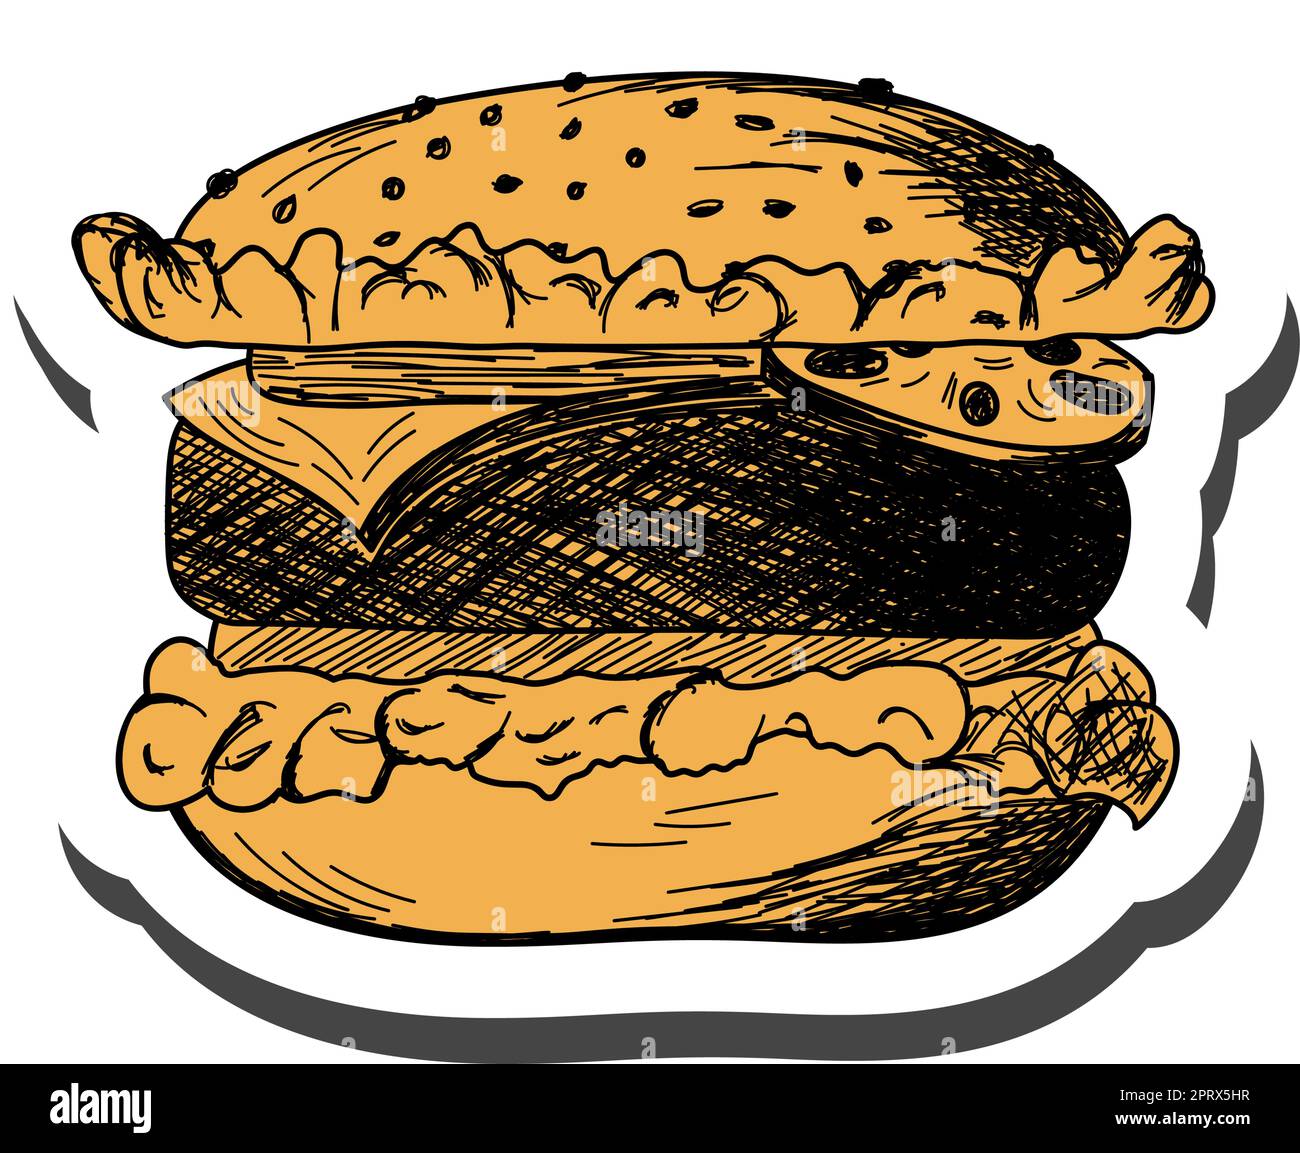 https://c8.alamy.com/comp/2PRX5HR/burger-sticker-2PRX5HR.jpg